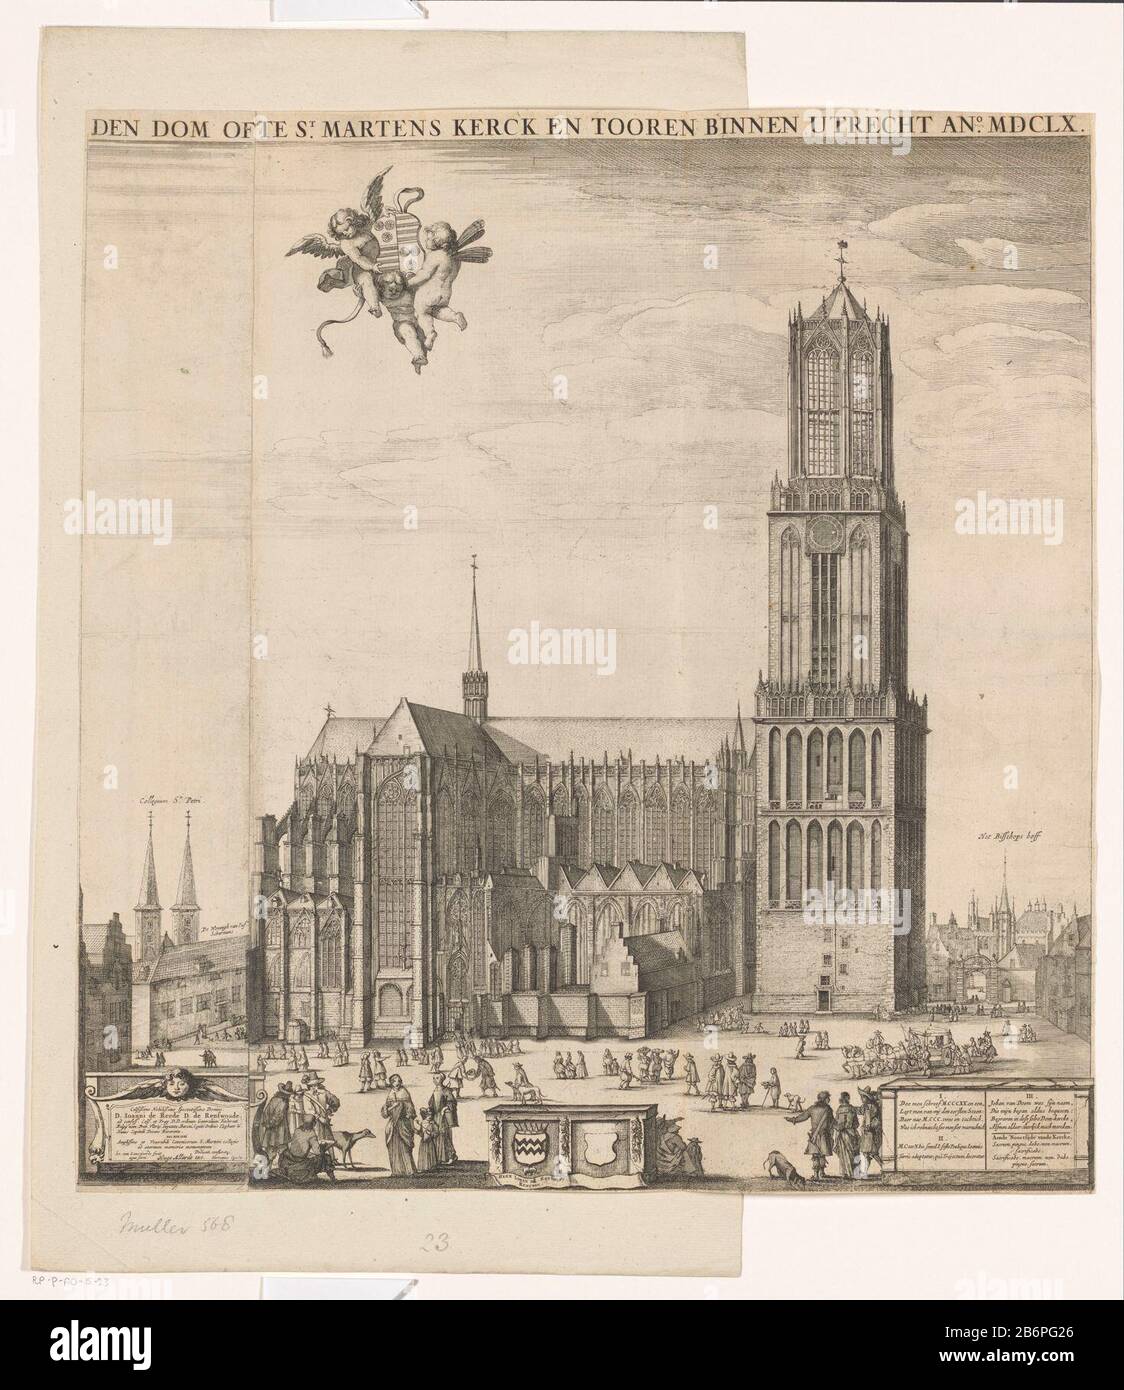 Gezicht op de Dom te Utrecht in 1660 Den Dom ofte st Martens kerck en  tooren binnen Utrecht ano MDCLX (titel op object) View of the Cathedral of  Utrecht as it existed